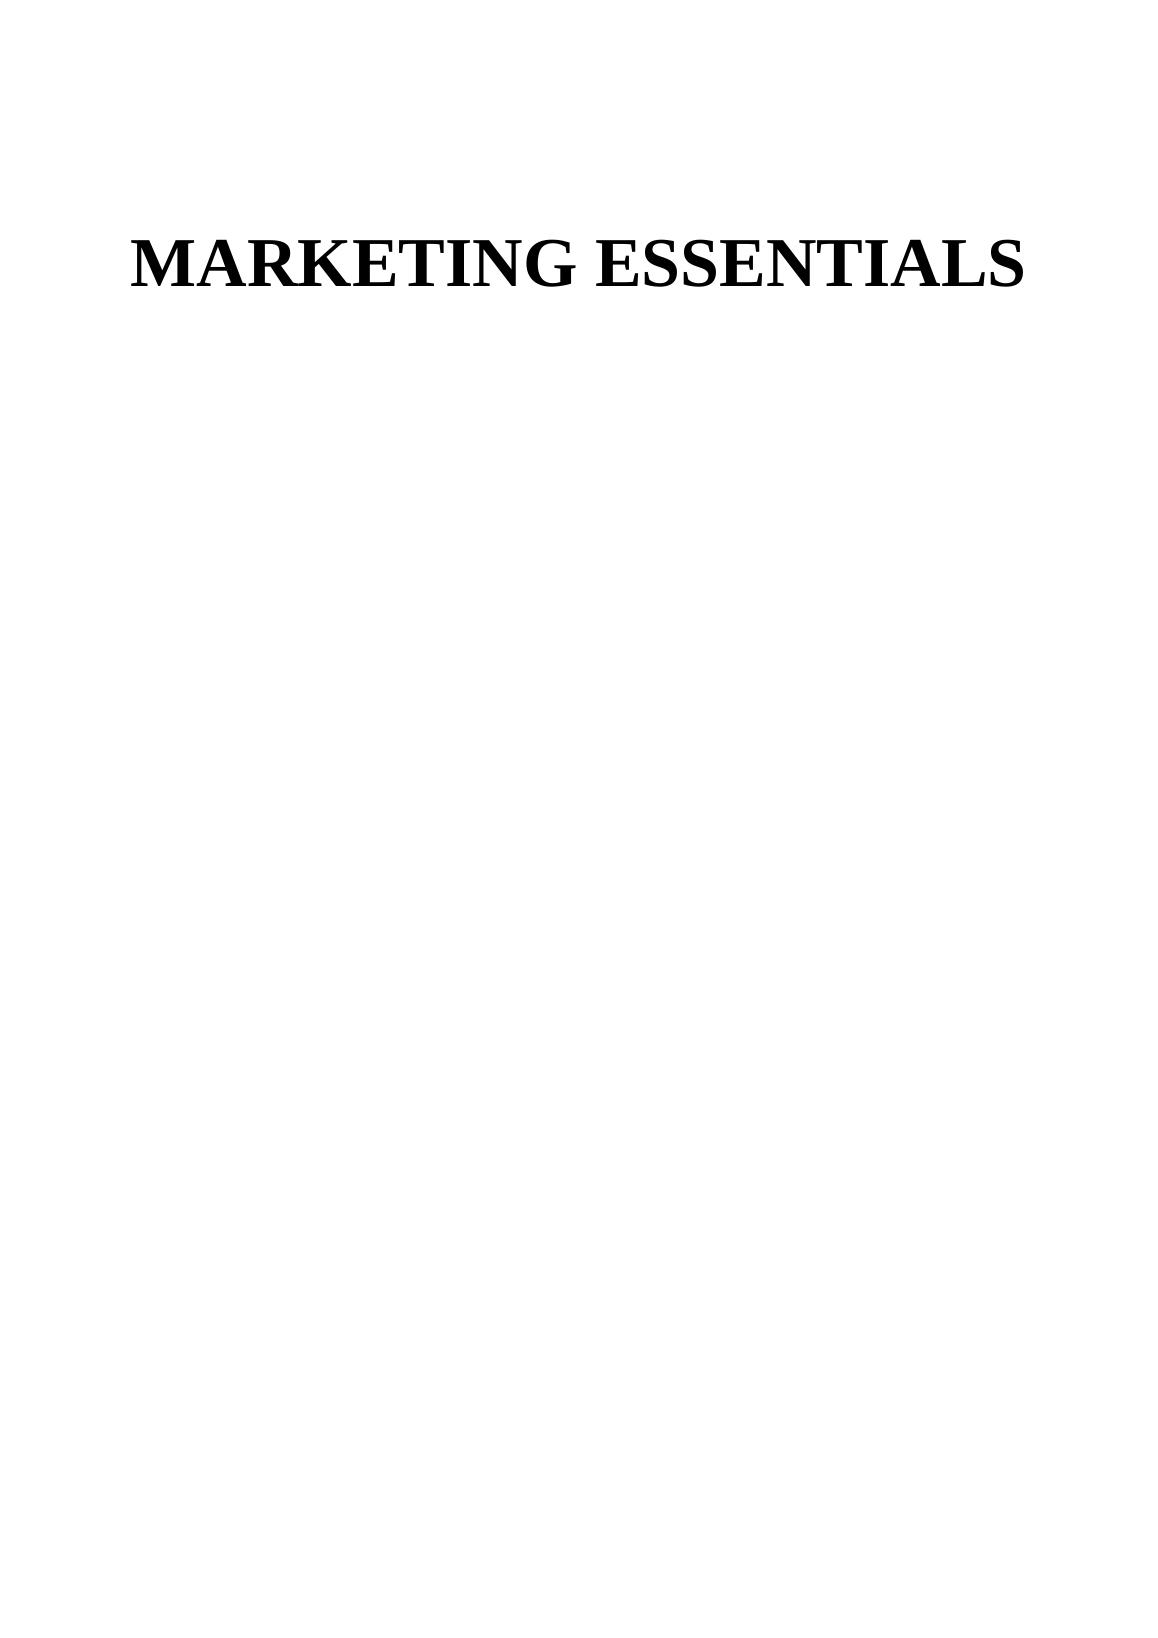 Assignment on Marketing Essentials - McDonald's_1